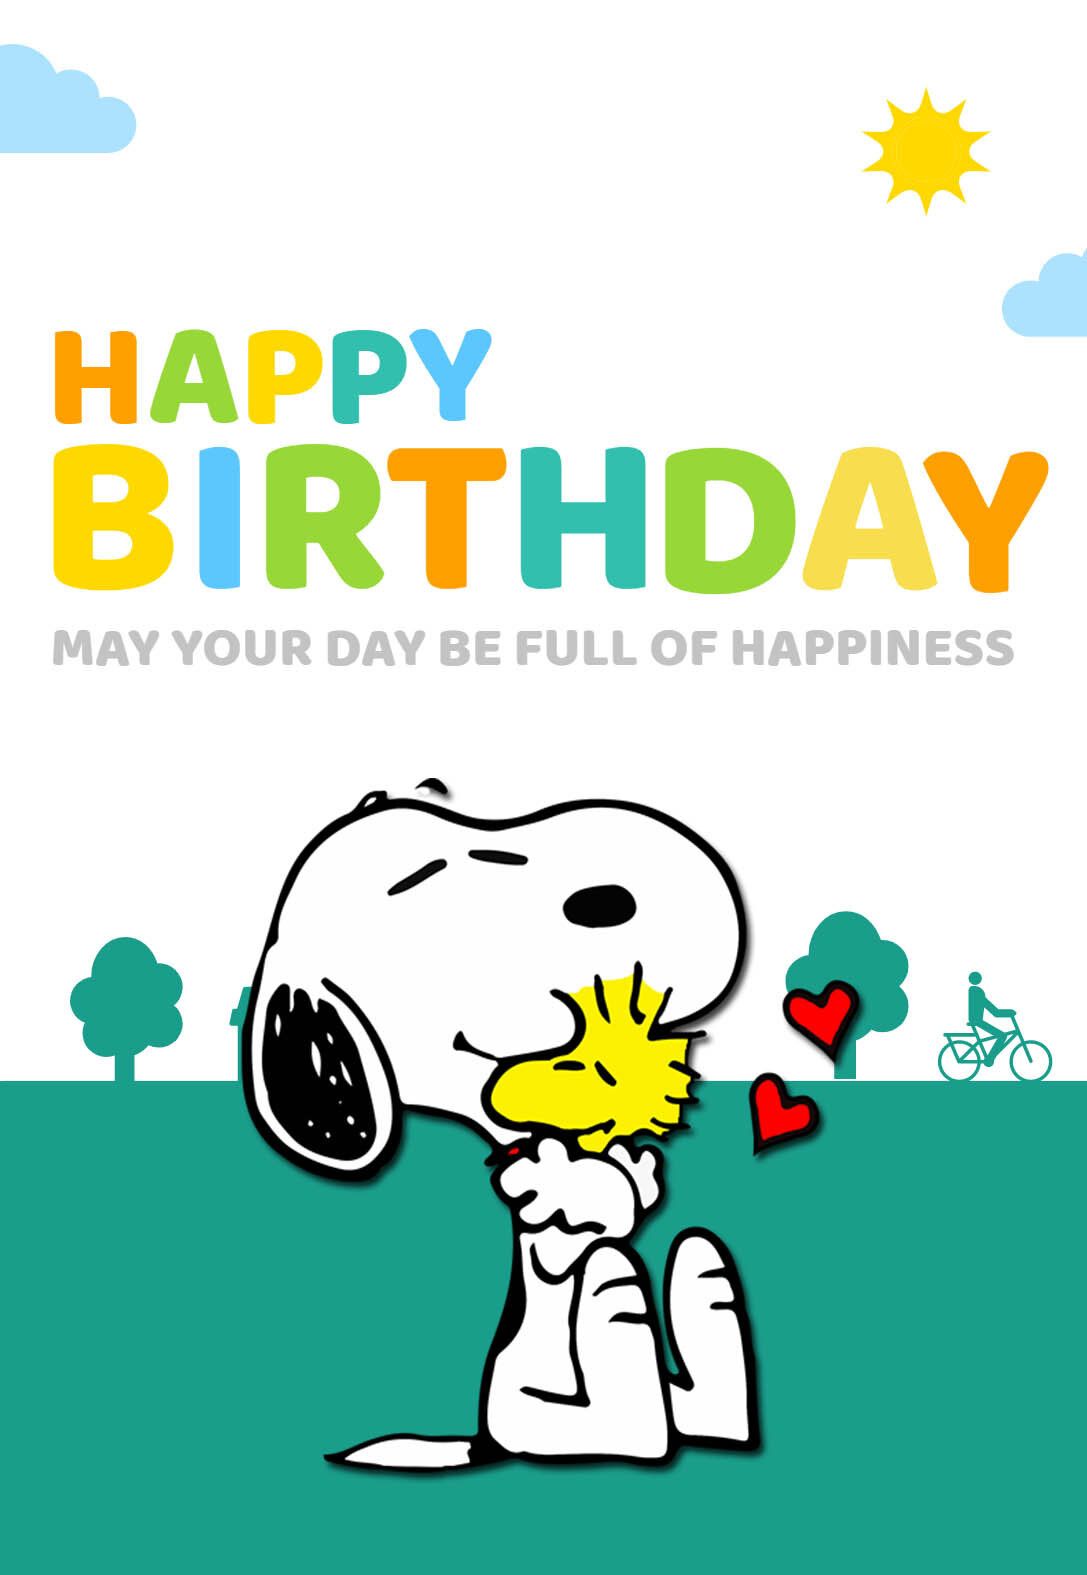 Happy birthday snoopy image, Snoopy birthday, Snoopy birthday image